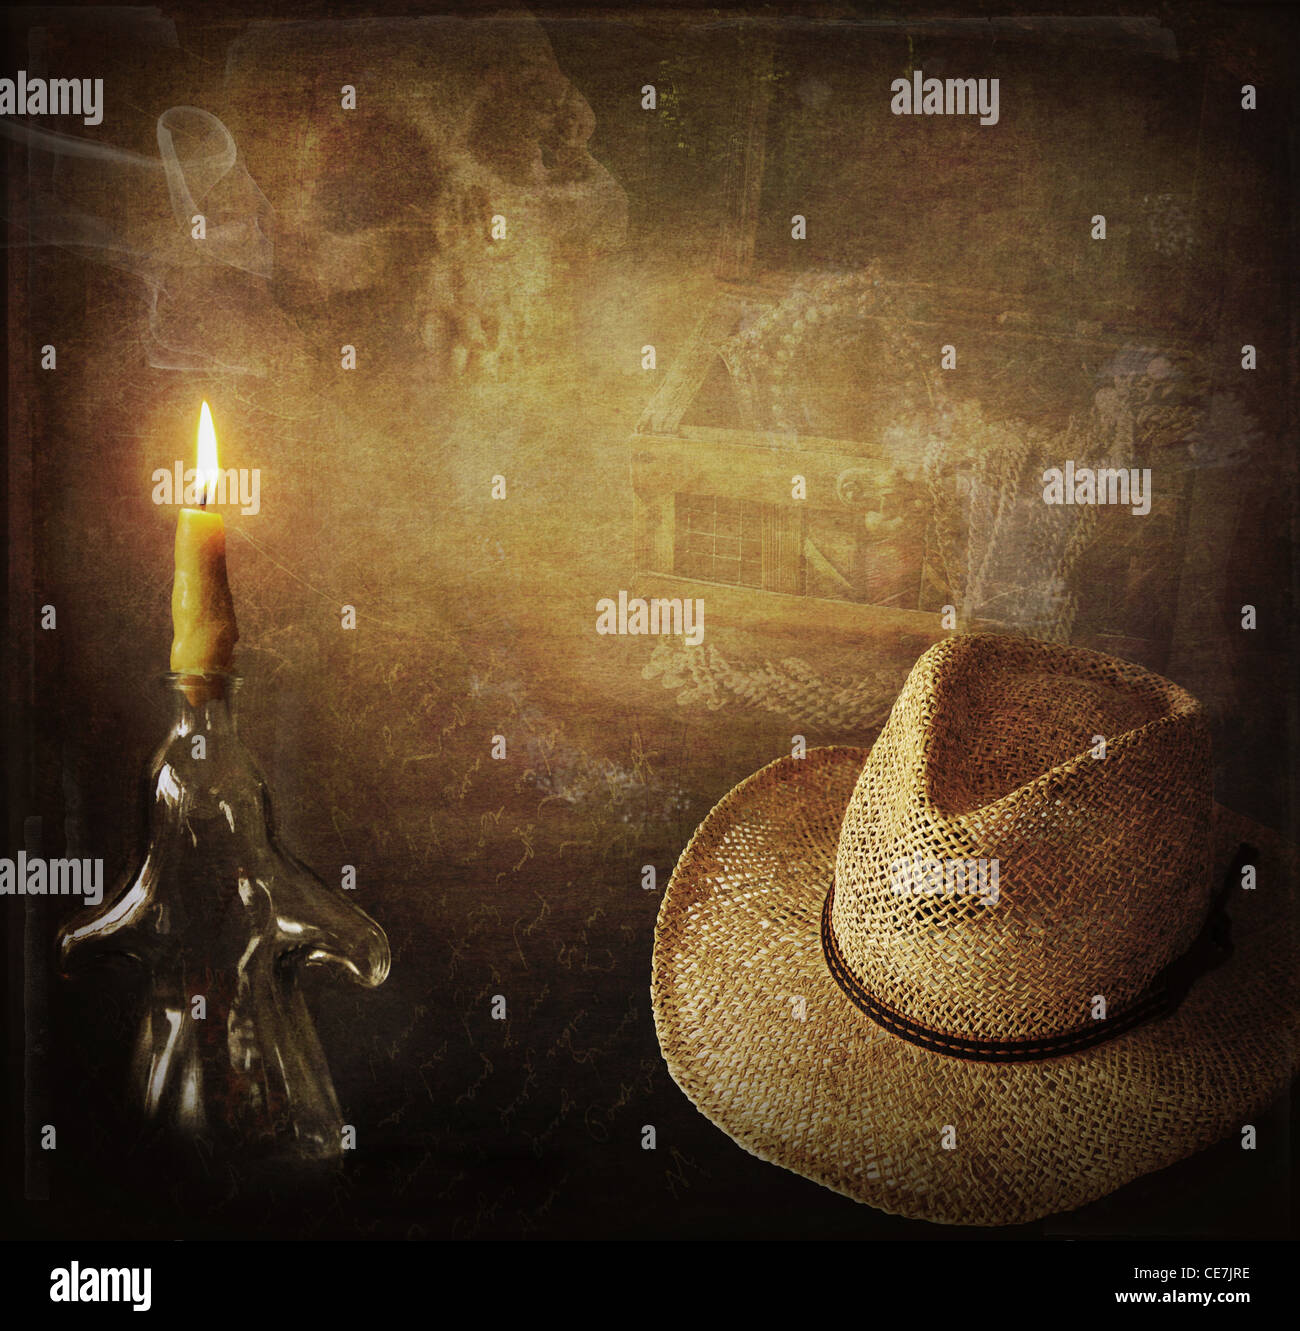 Grunge background Indiana Jones like, hut, candle, skull and treasure chest Stock Photo